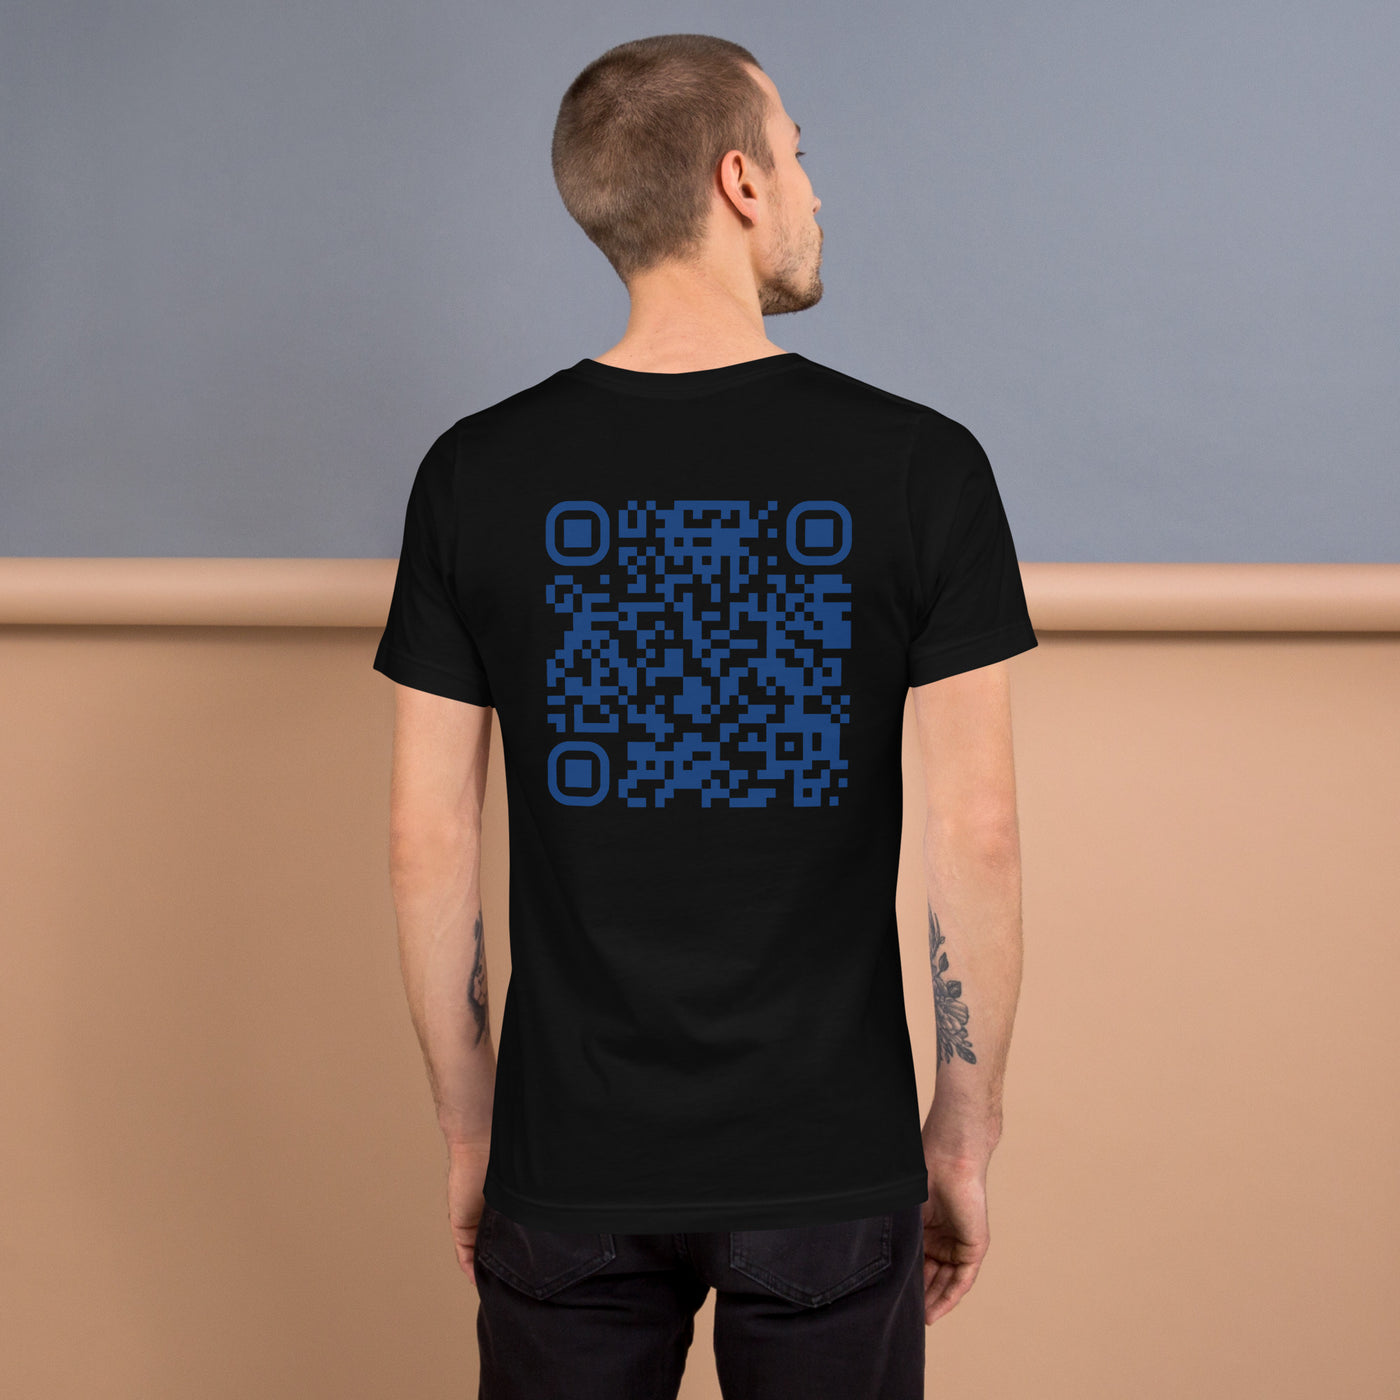 Who's the New Kid, Hacker, Developer, Gamer, Crypto King V1 (Blue) - Unisex t-shirt Personalized QR Code